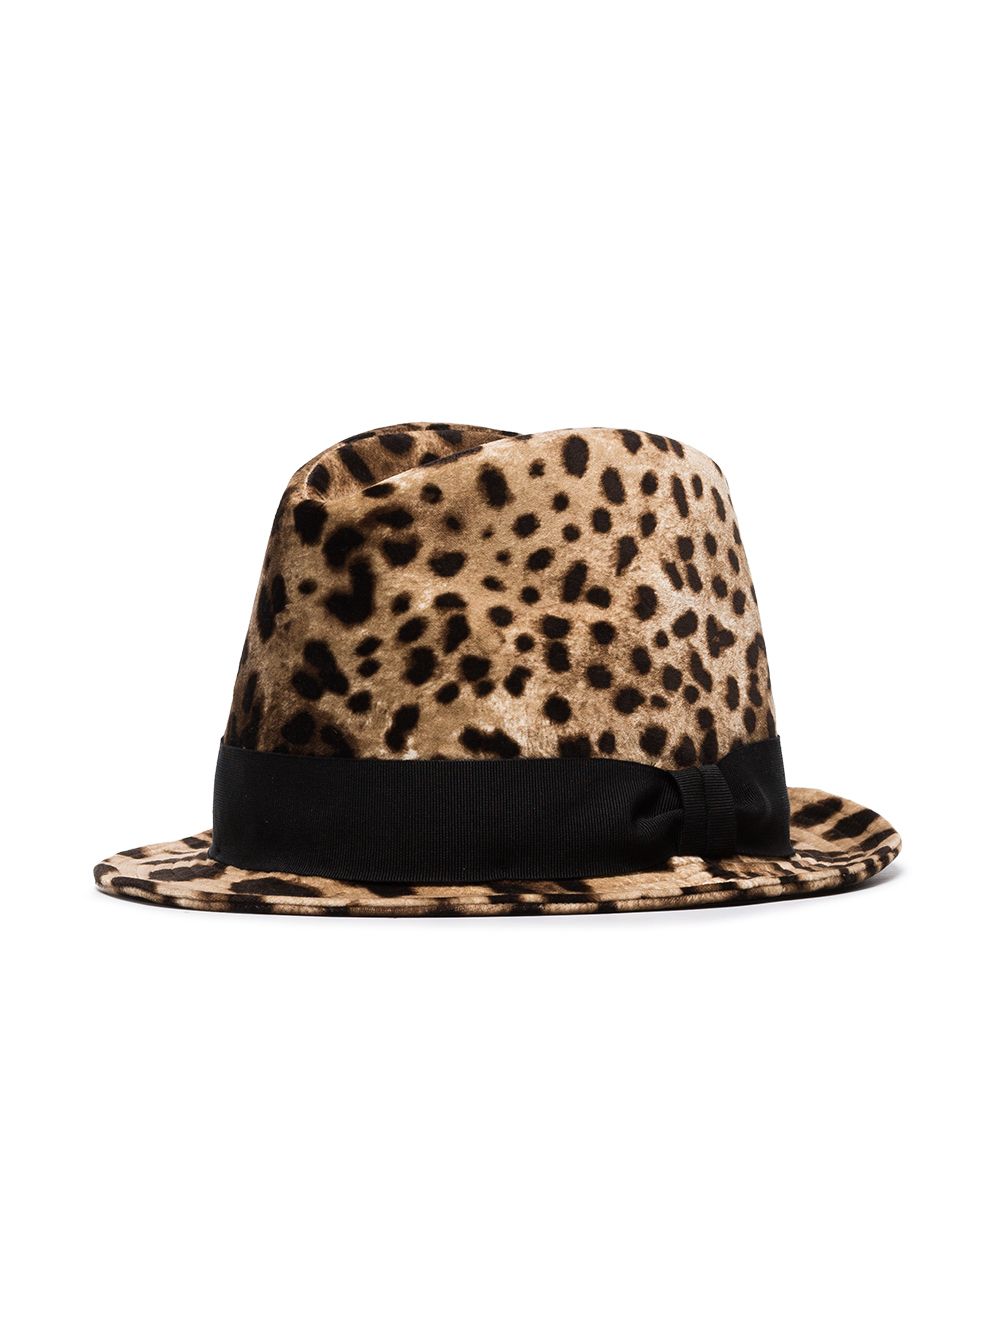 фото Dolce & Gabbana шляпа-трилби с леопардовым принтом